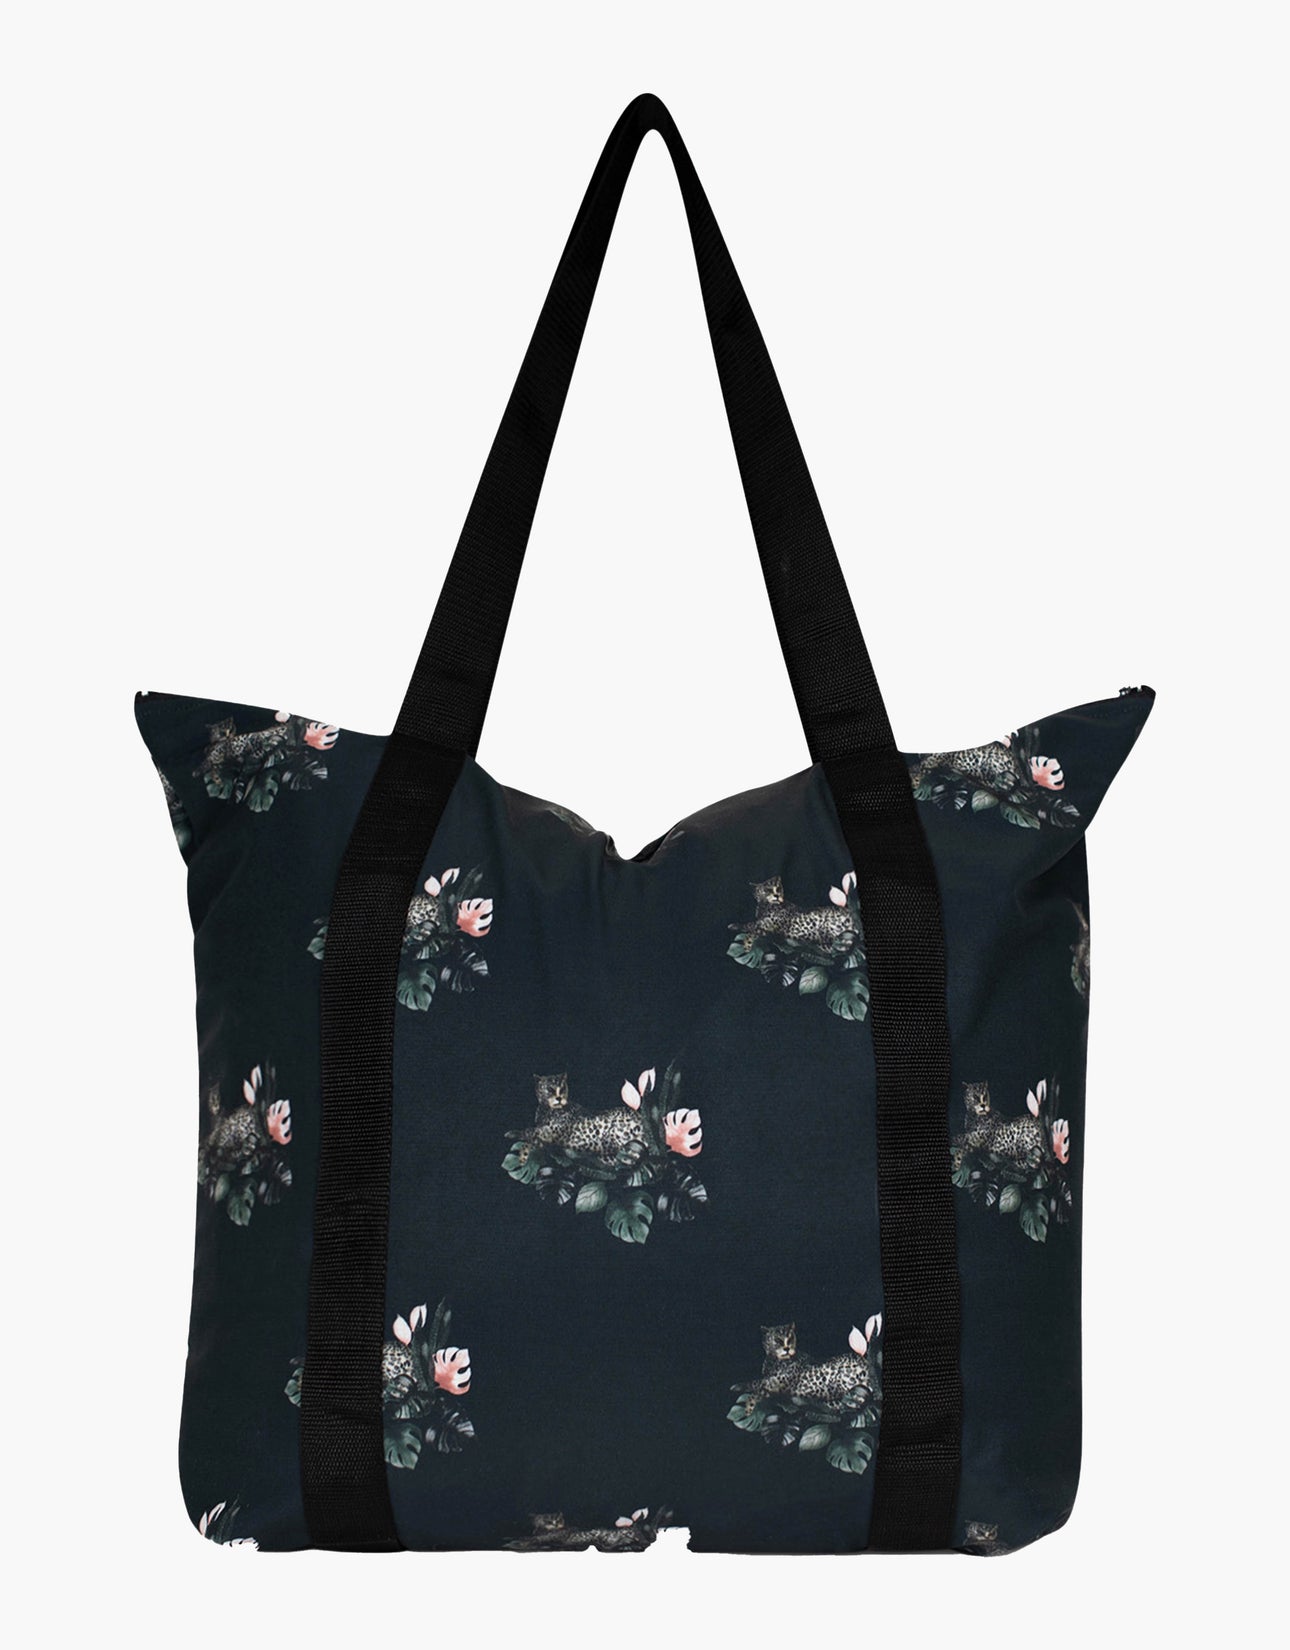 Stylish Lululemon Reusable Tote Bag - Limited Stock!